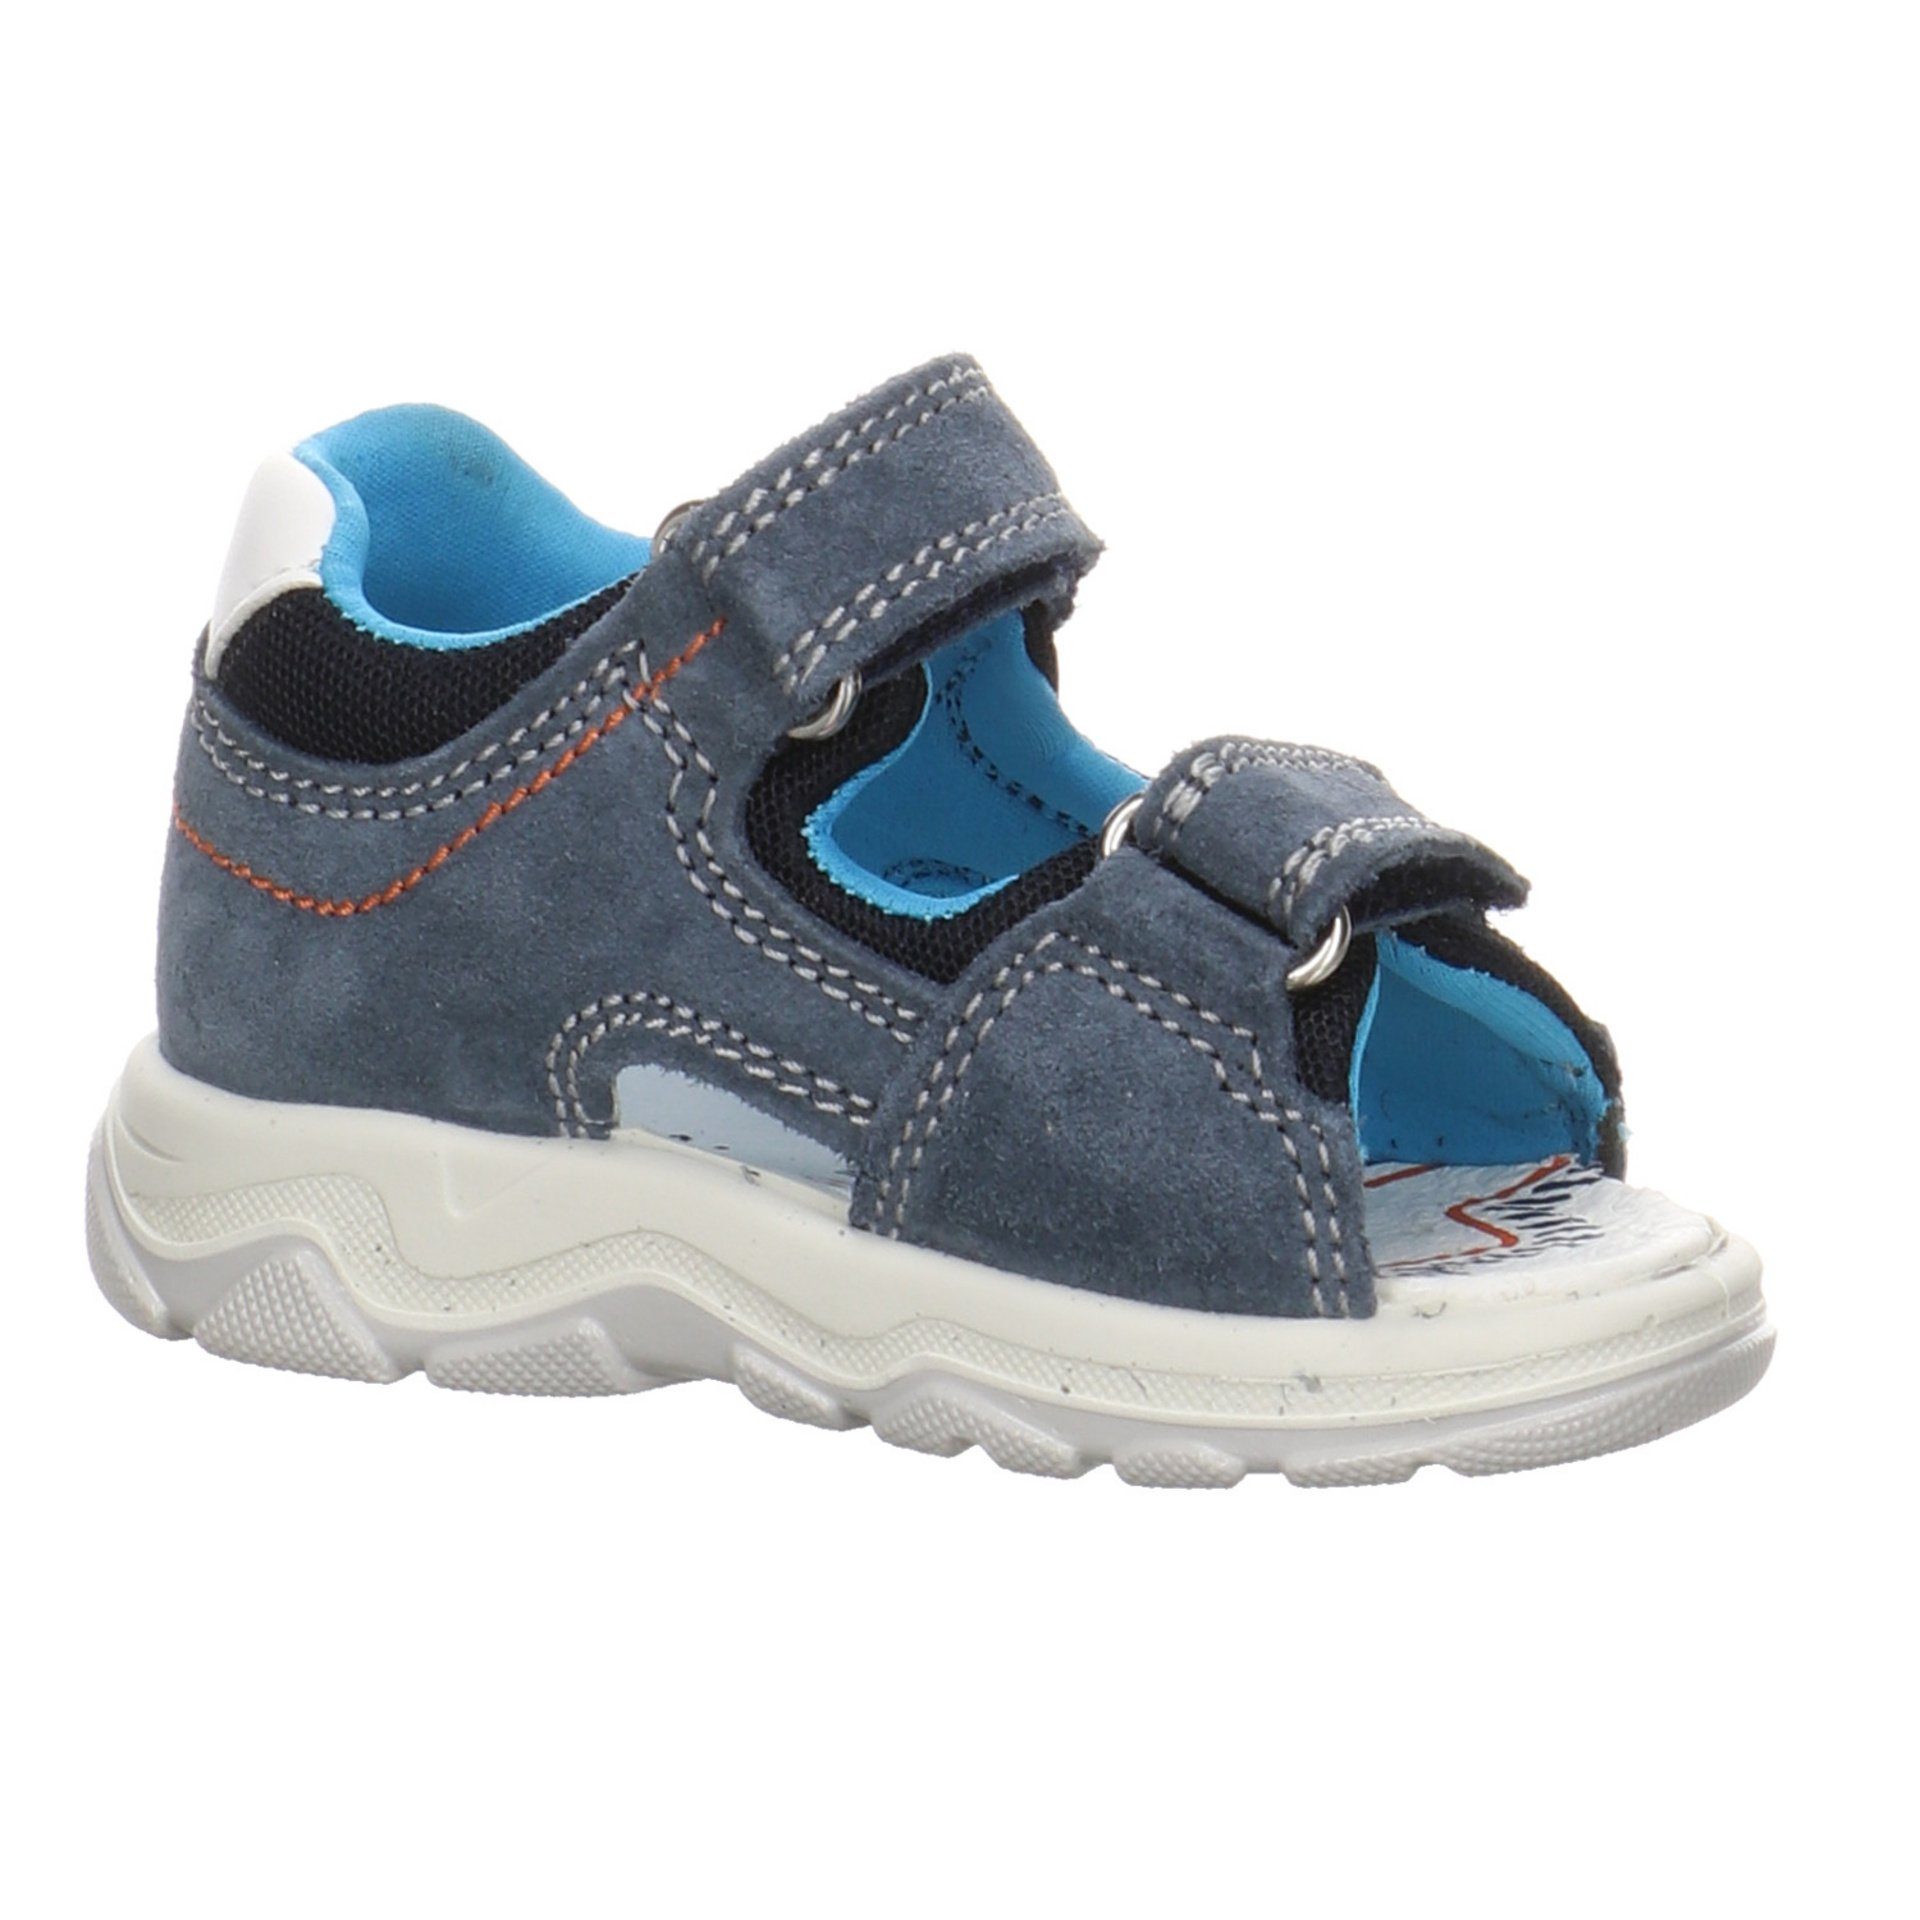 Leder-/Textilkombination Lurchi Azzuro Sandale Schuhe Sandalen Minilette Kinderschuhe Gani Jungen